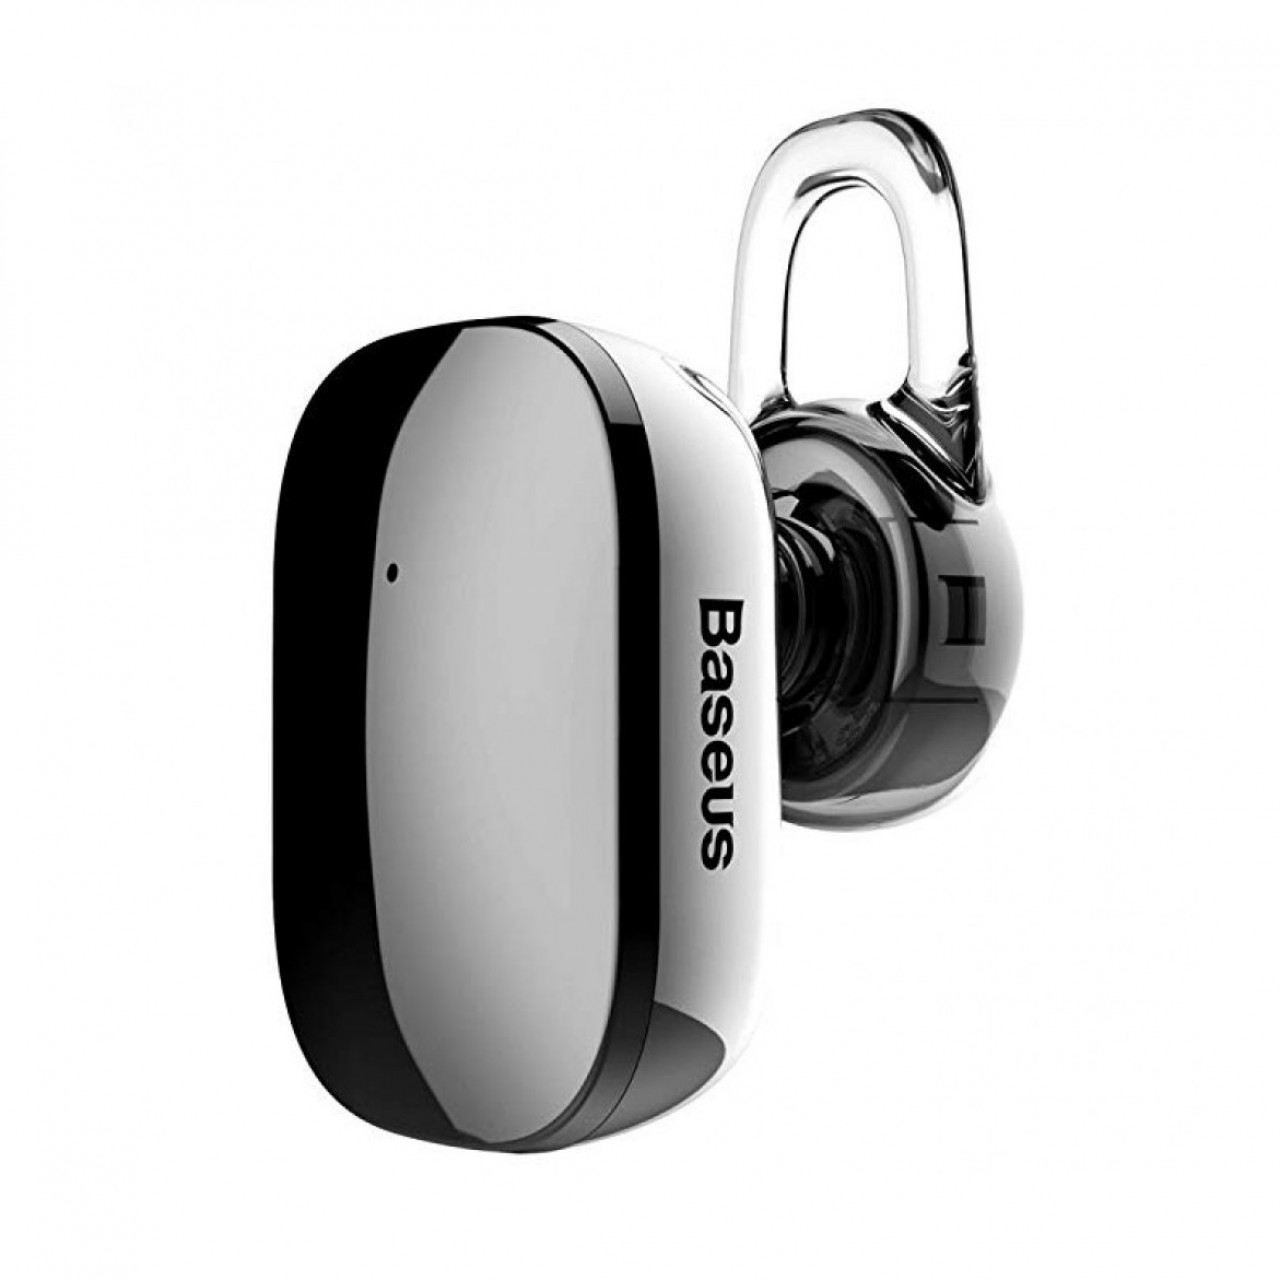 Baseus Encok A02 One Side Mini Bluetooth Earphone With Microphone - 4.1 Bluetooth Technology